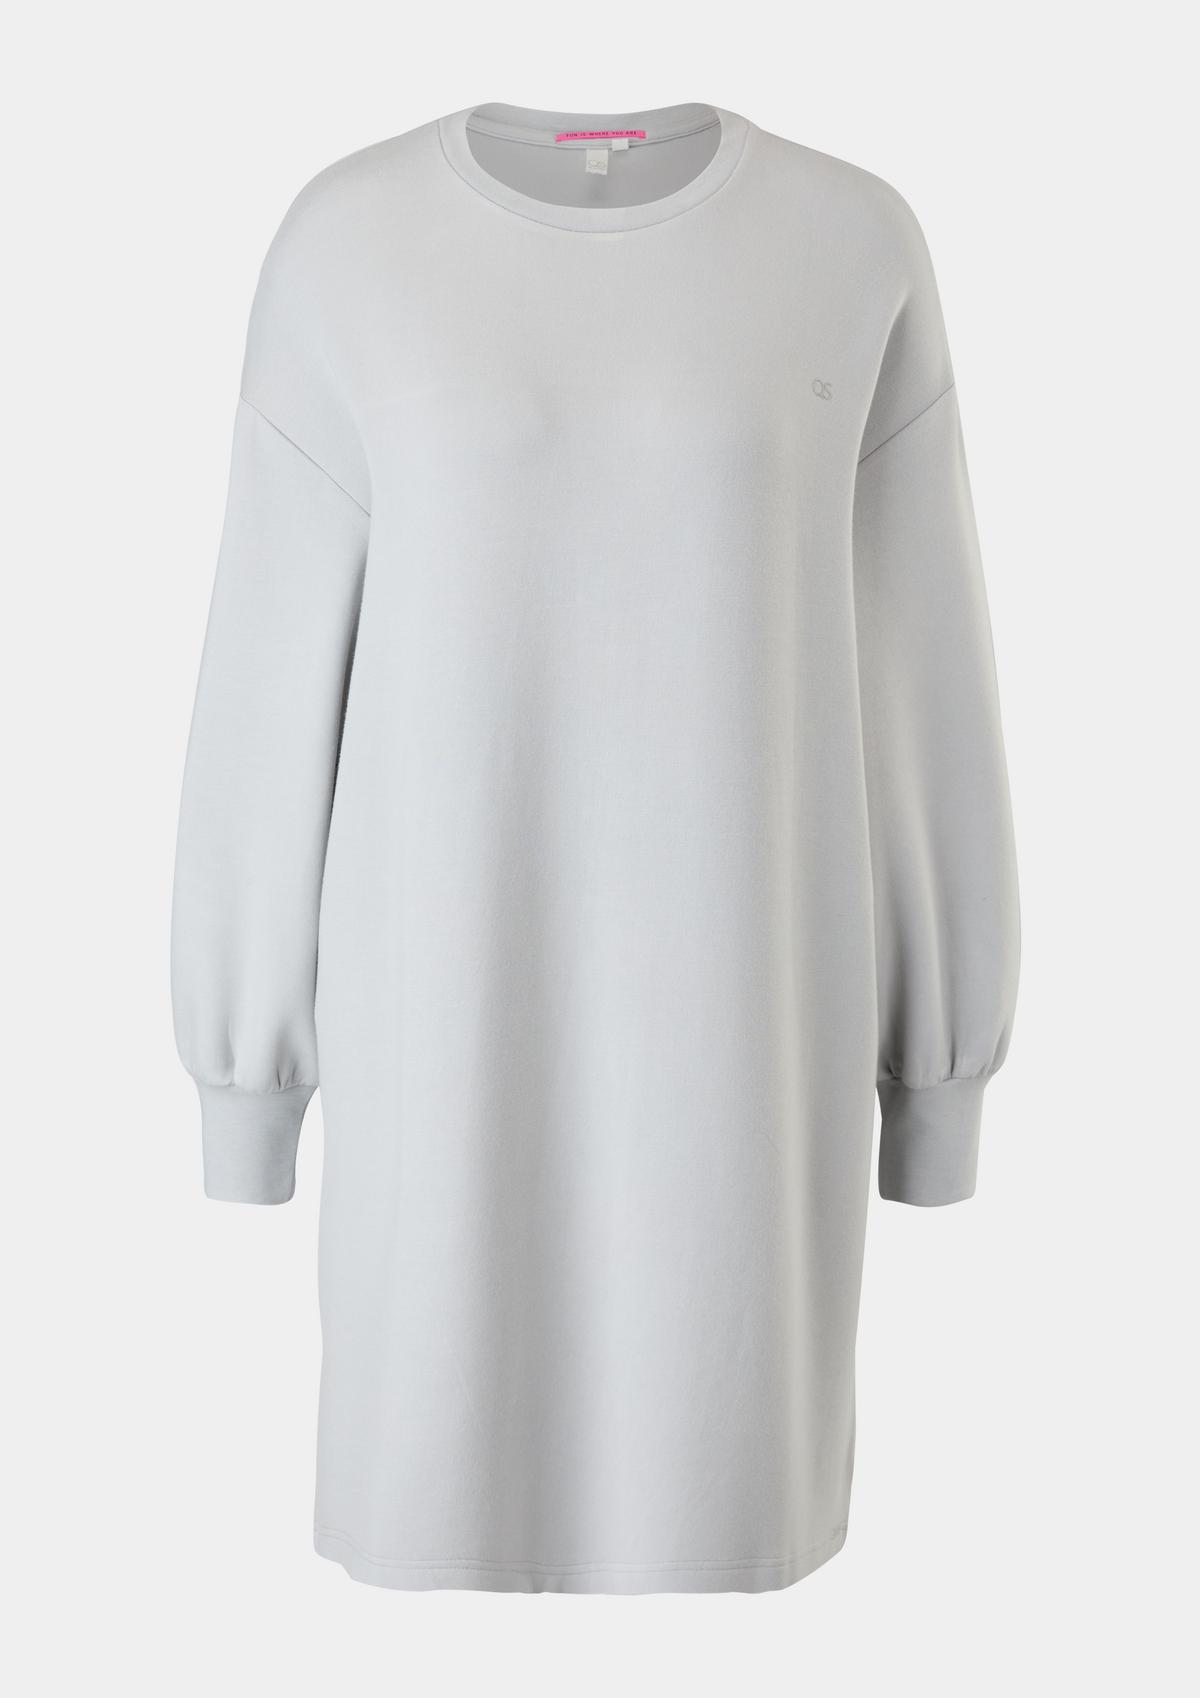 s.Oliver Sweatshirt dress made of stretch viscose